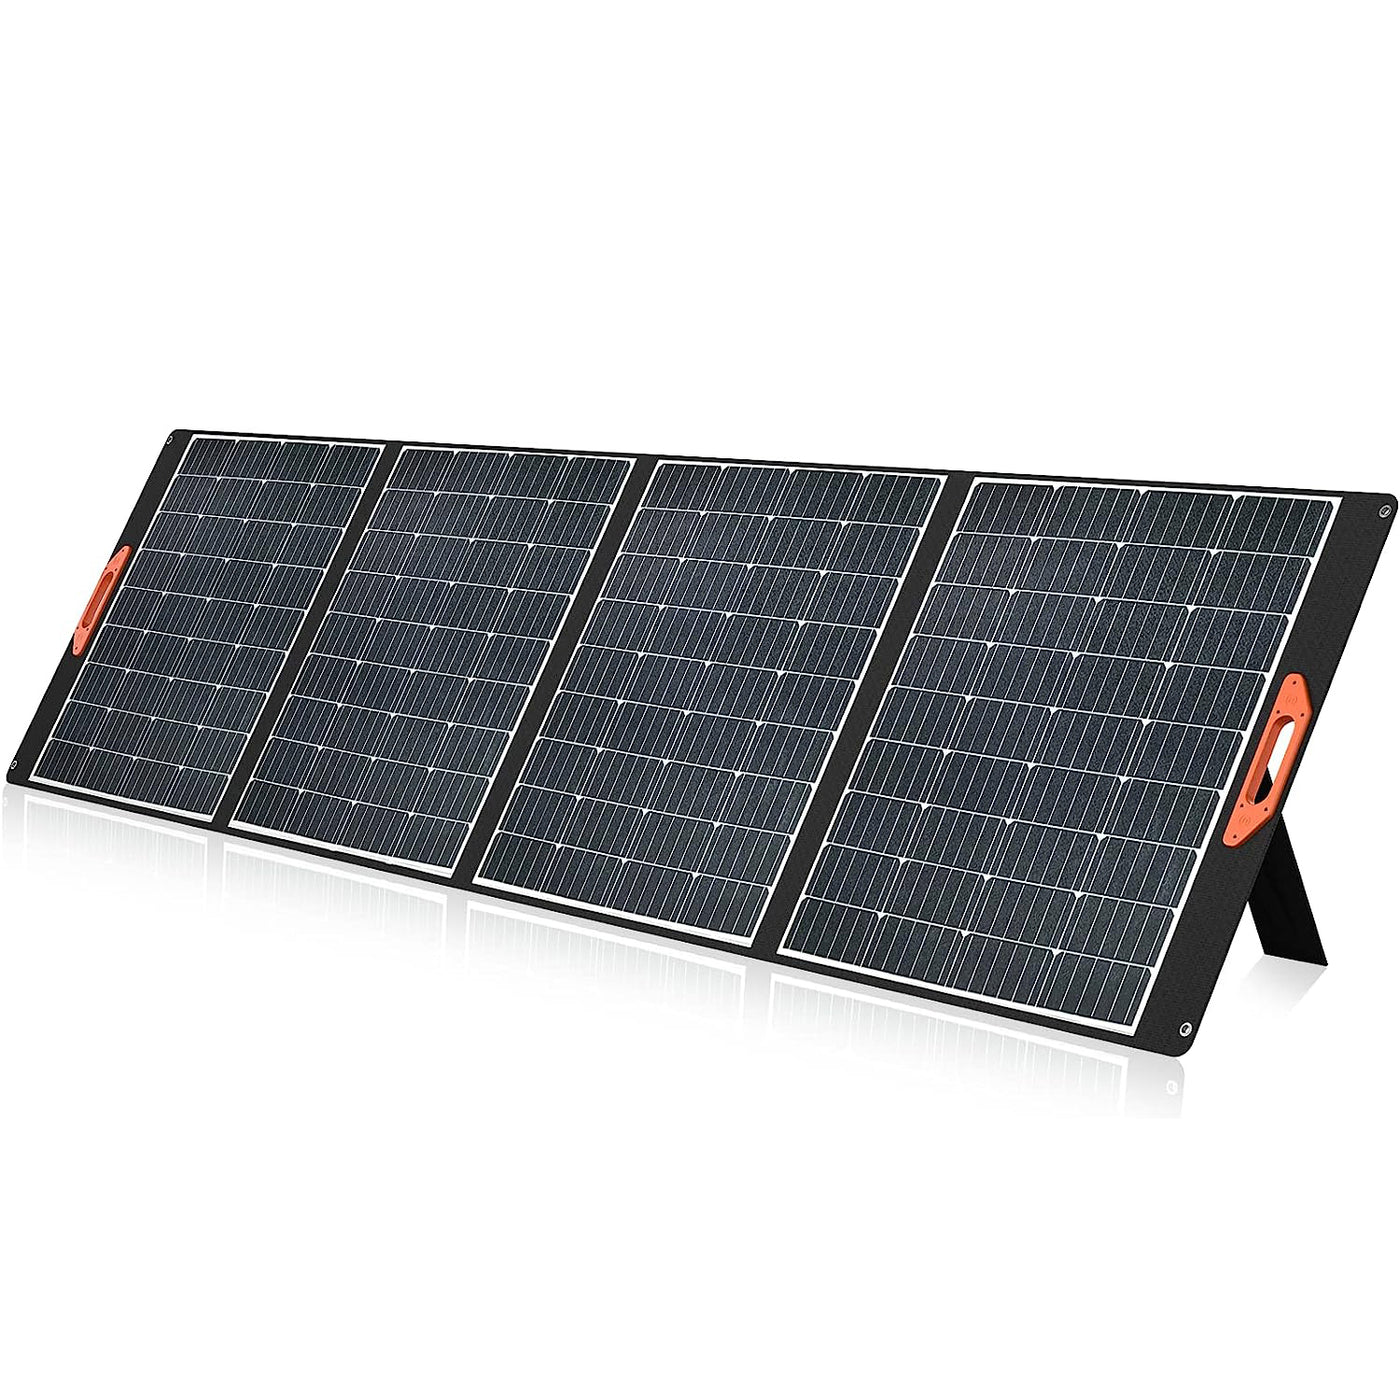 MONTEK SP400 Portable Solar Panel 400W with Adjustable Kickstand